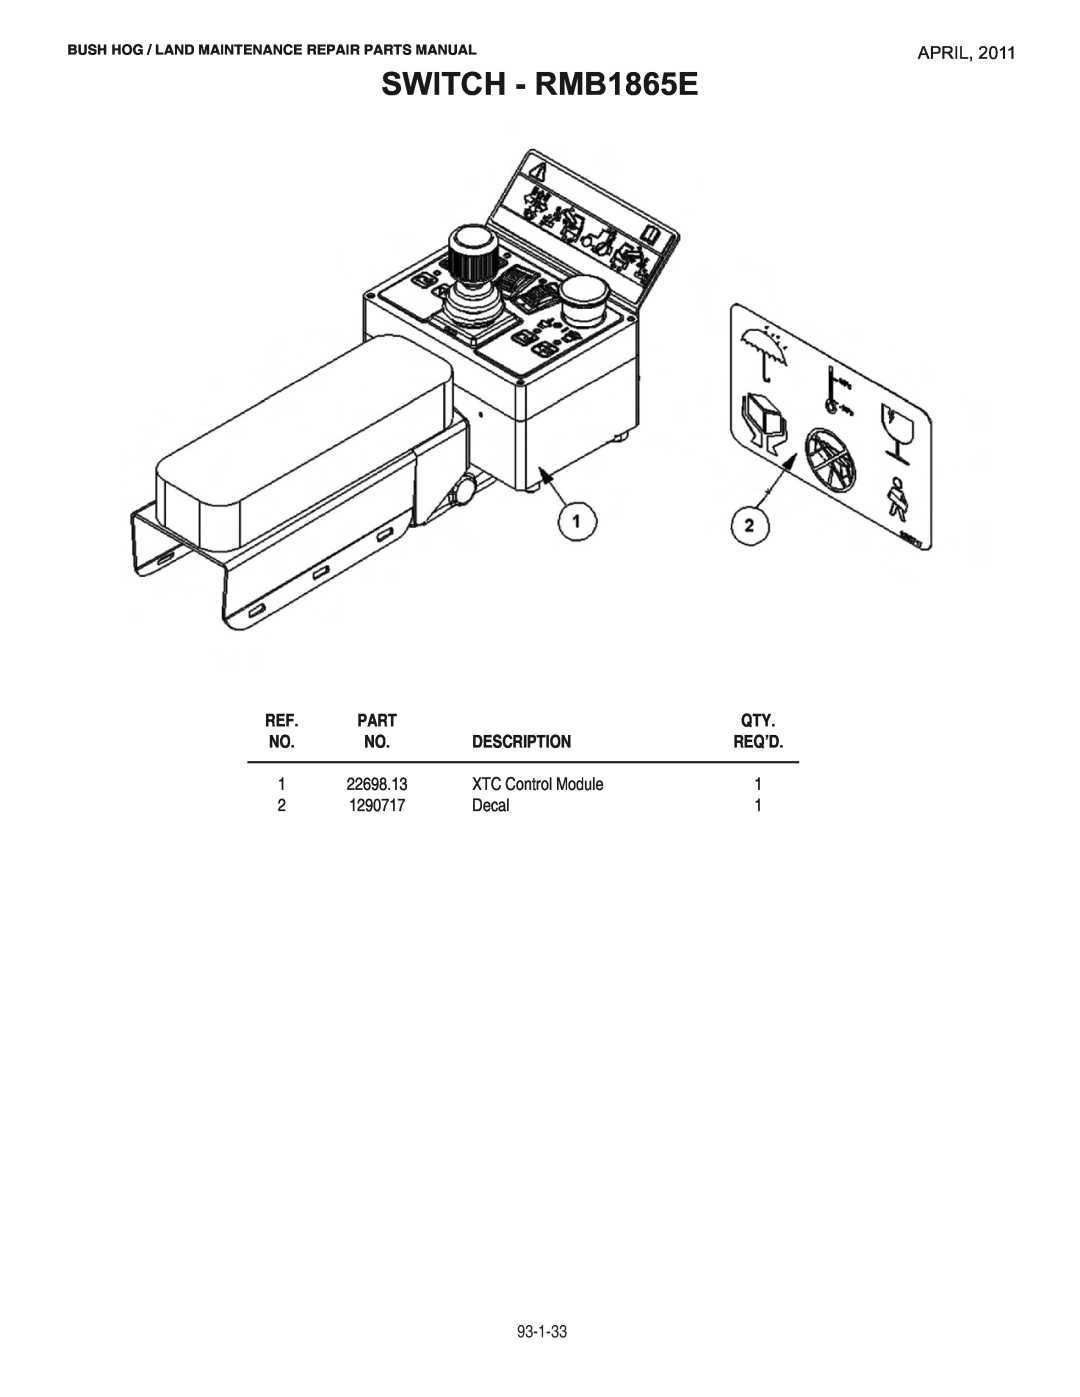 Bush Hog manual SWITCH - RMB1865E, April, Description, 22698.13, XTC Control Module, 1290717, Decal, Req’D, Part 